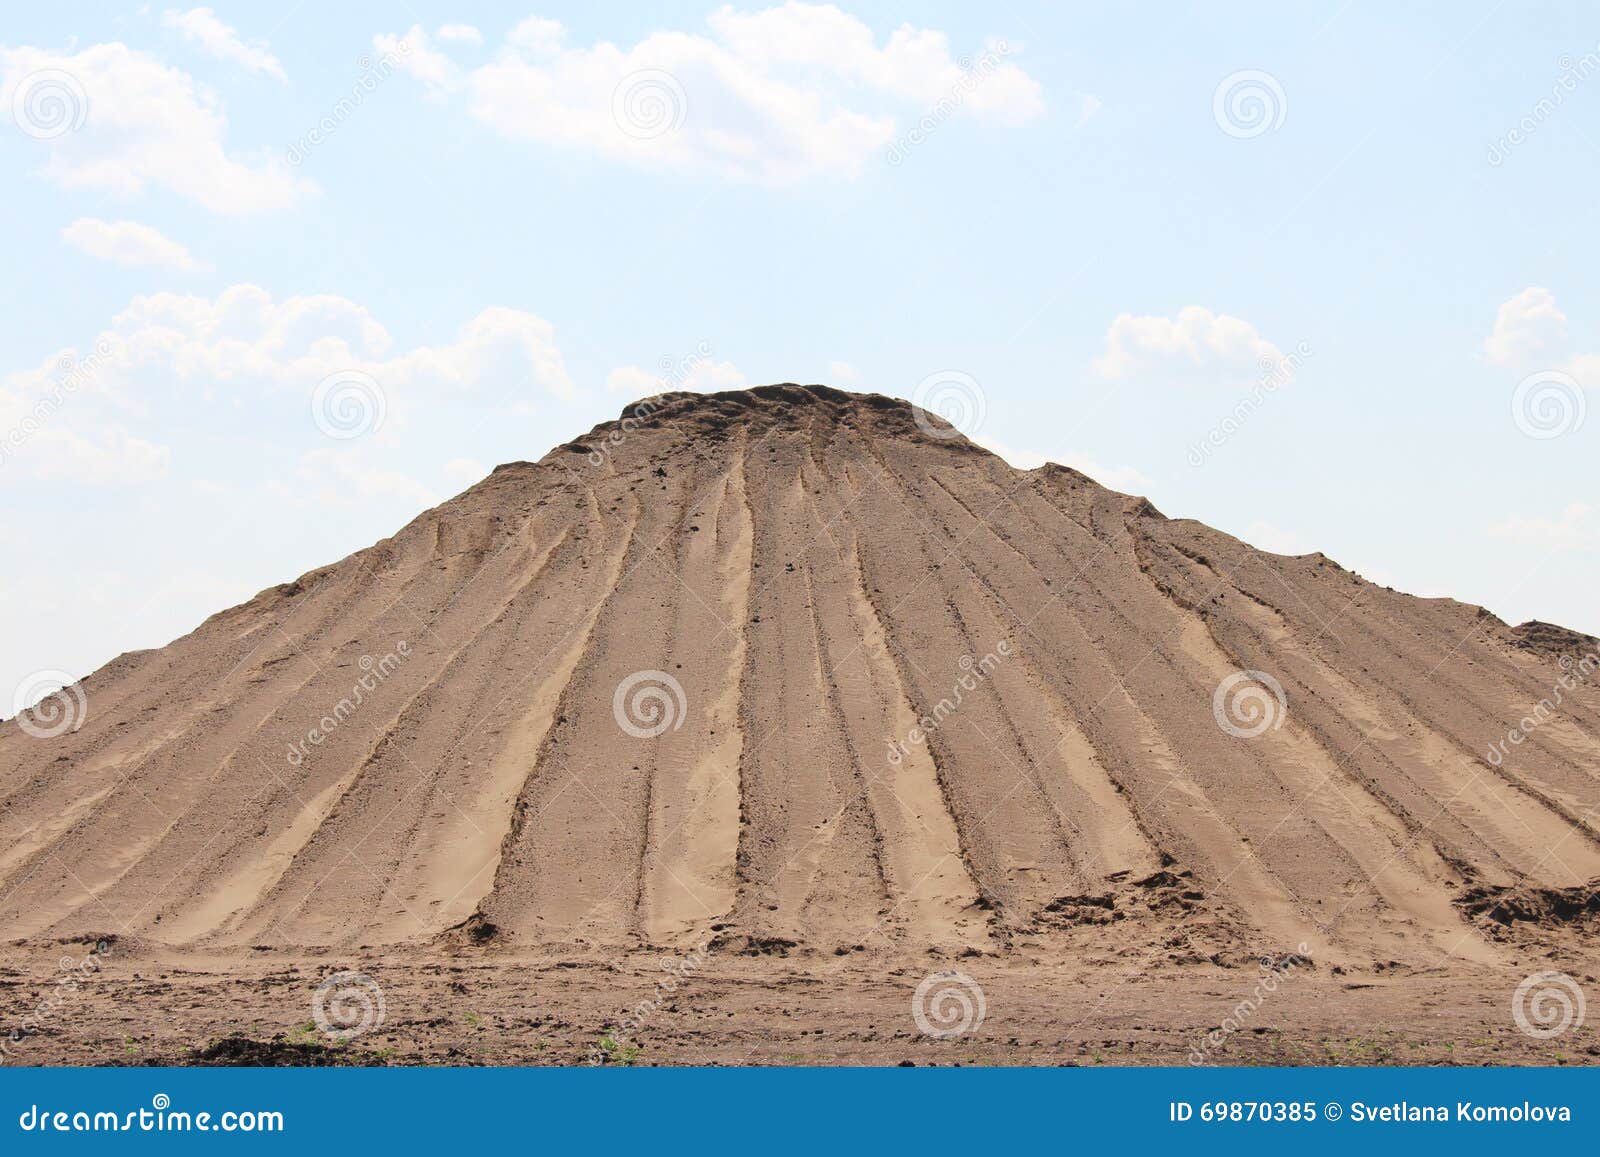 pile of sand mountain